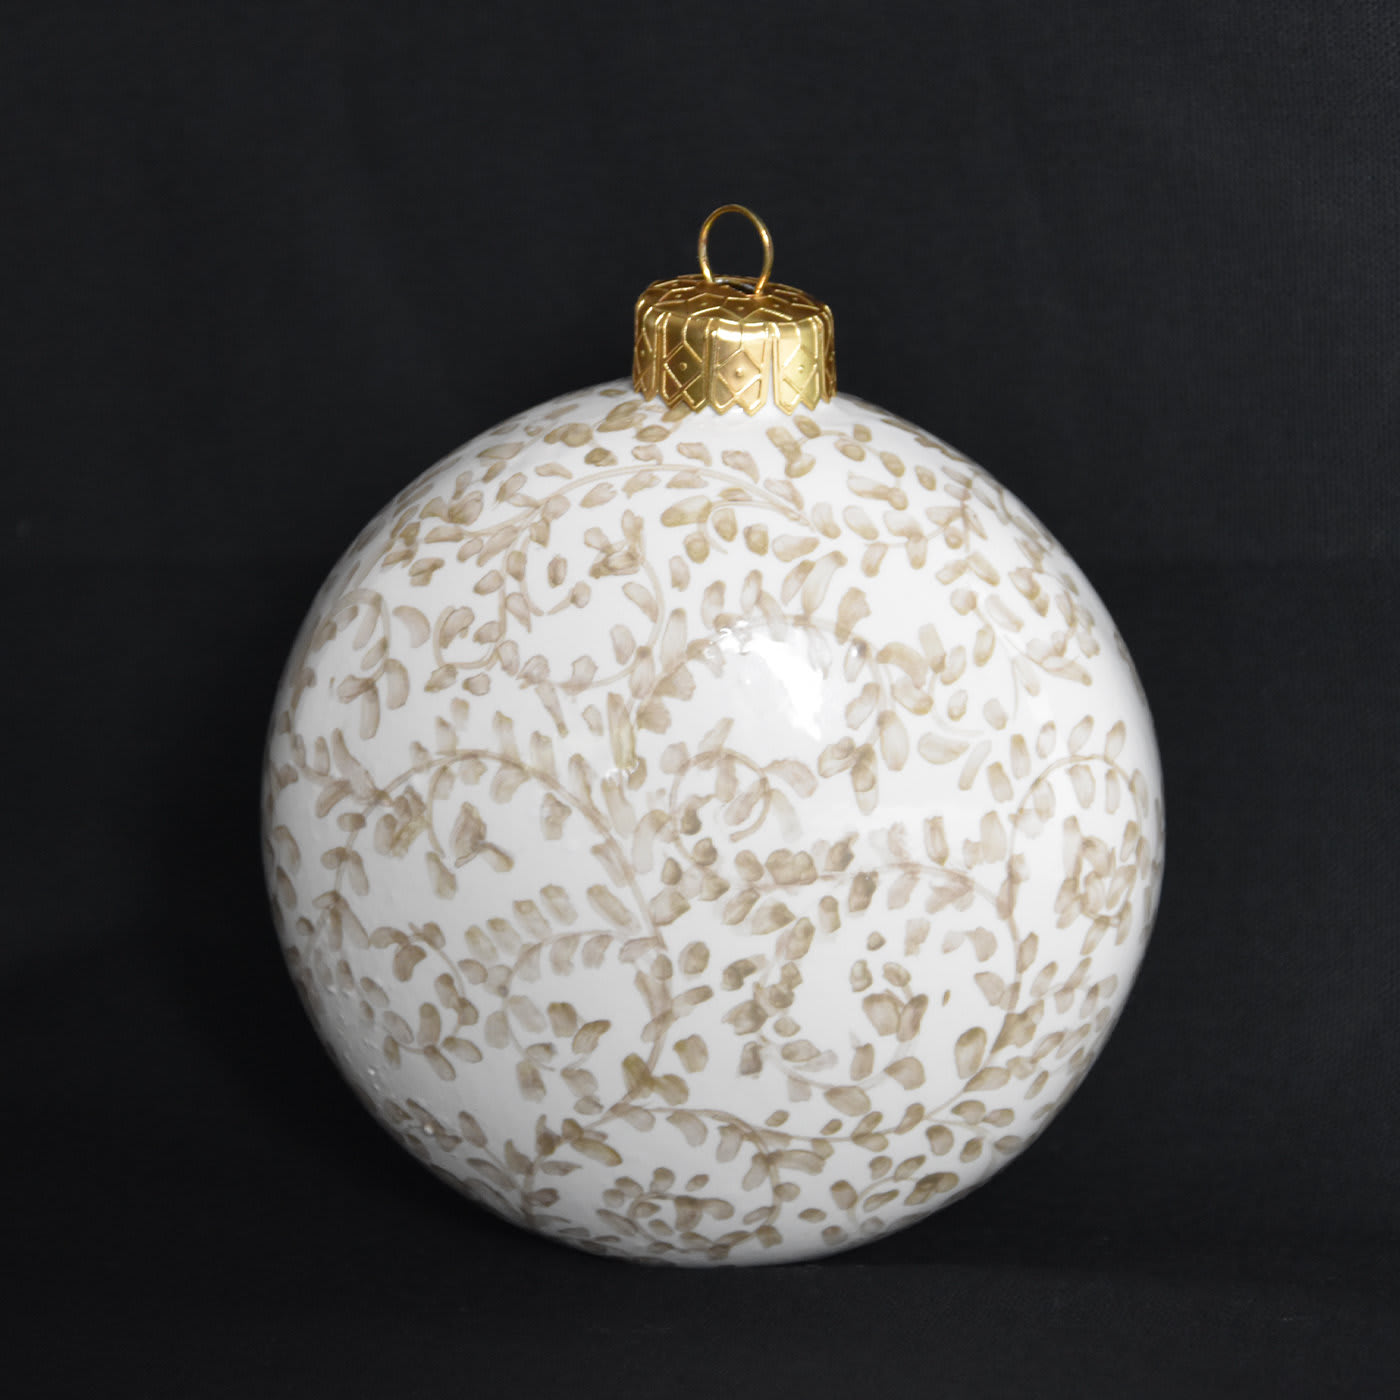 Ivory Floral Christmas Ball Ornament FOTO SBAGLIATA - Idea Ceramica